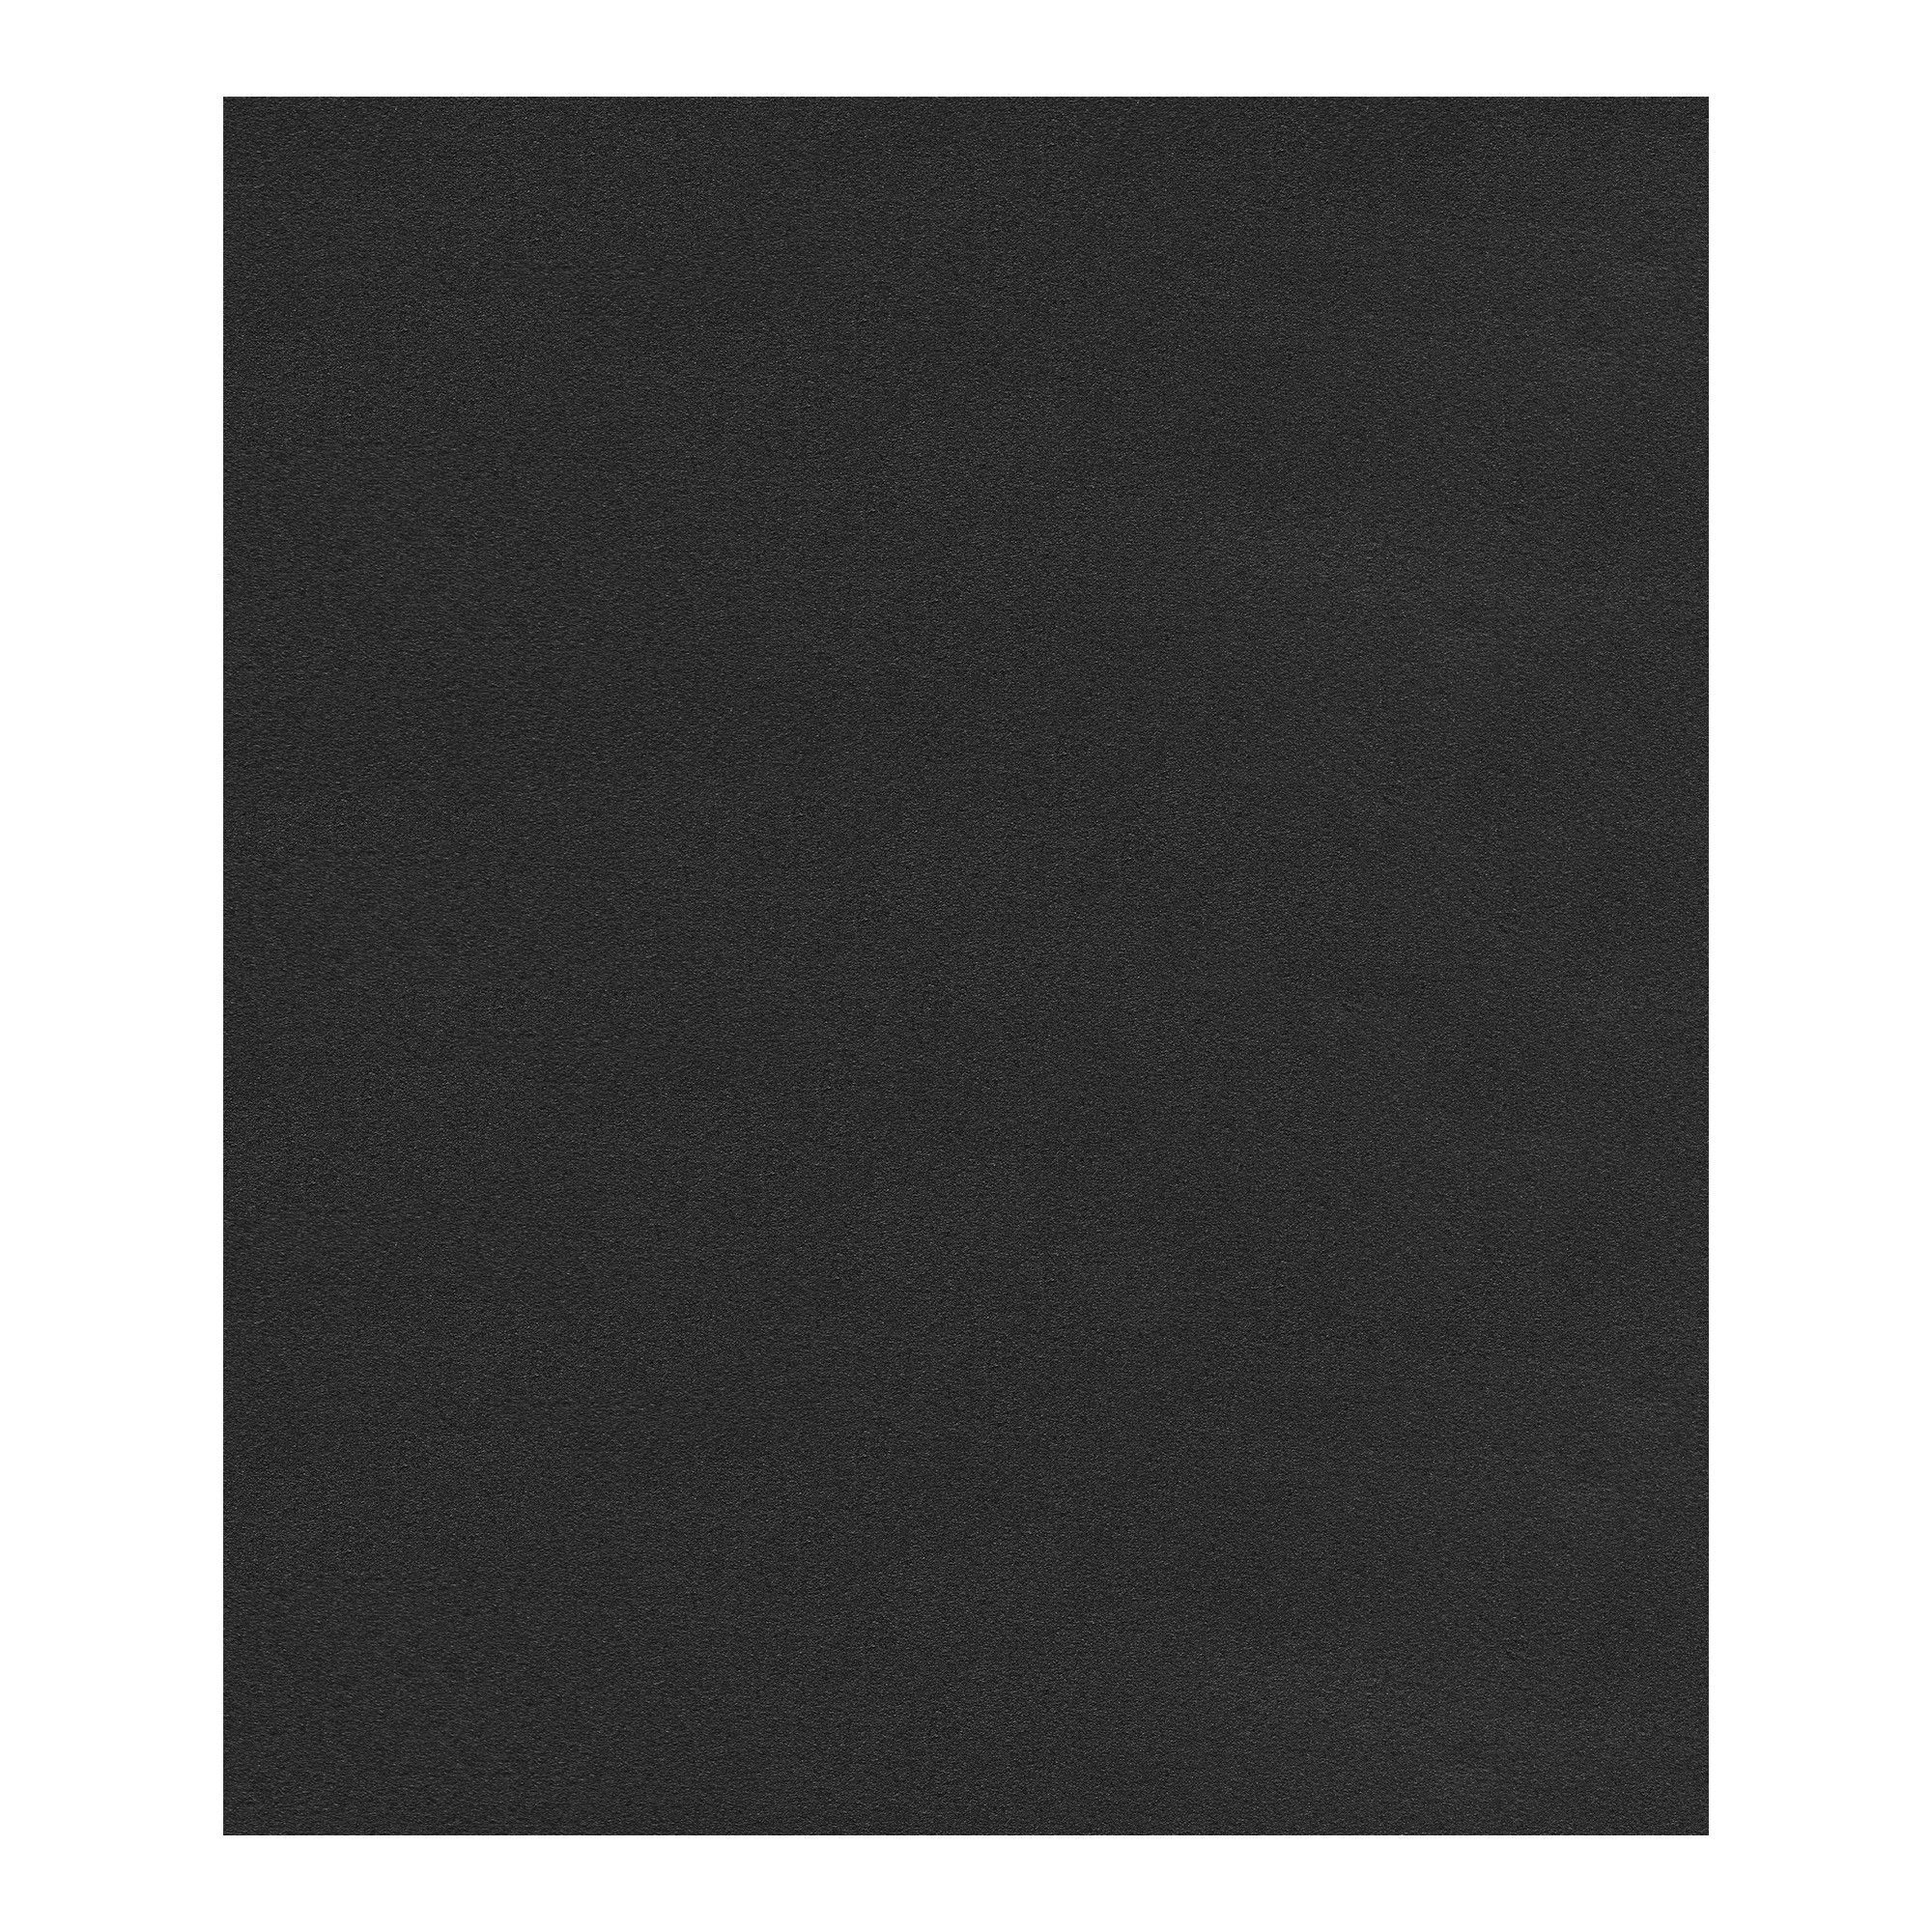 Tapis de garage Moose Racing gris/noir 78,5x99 cm